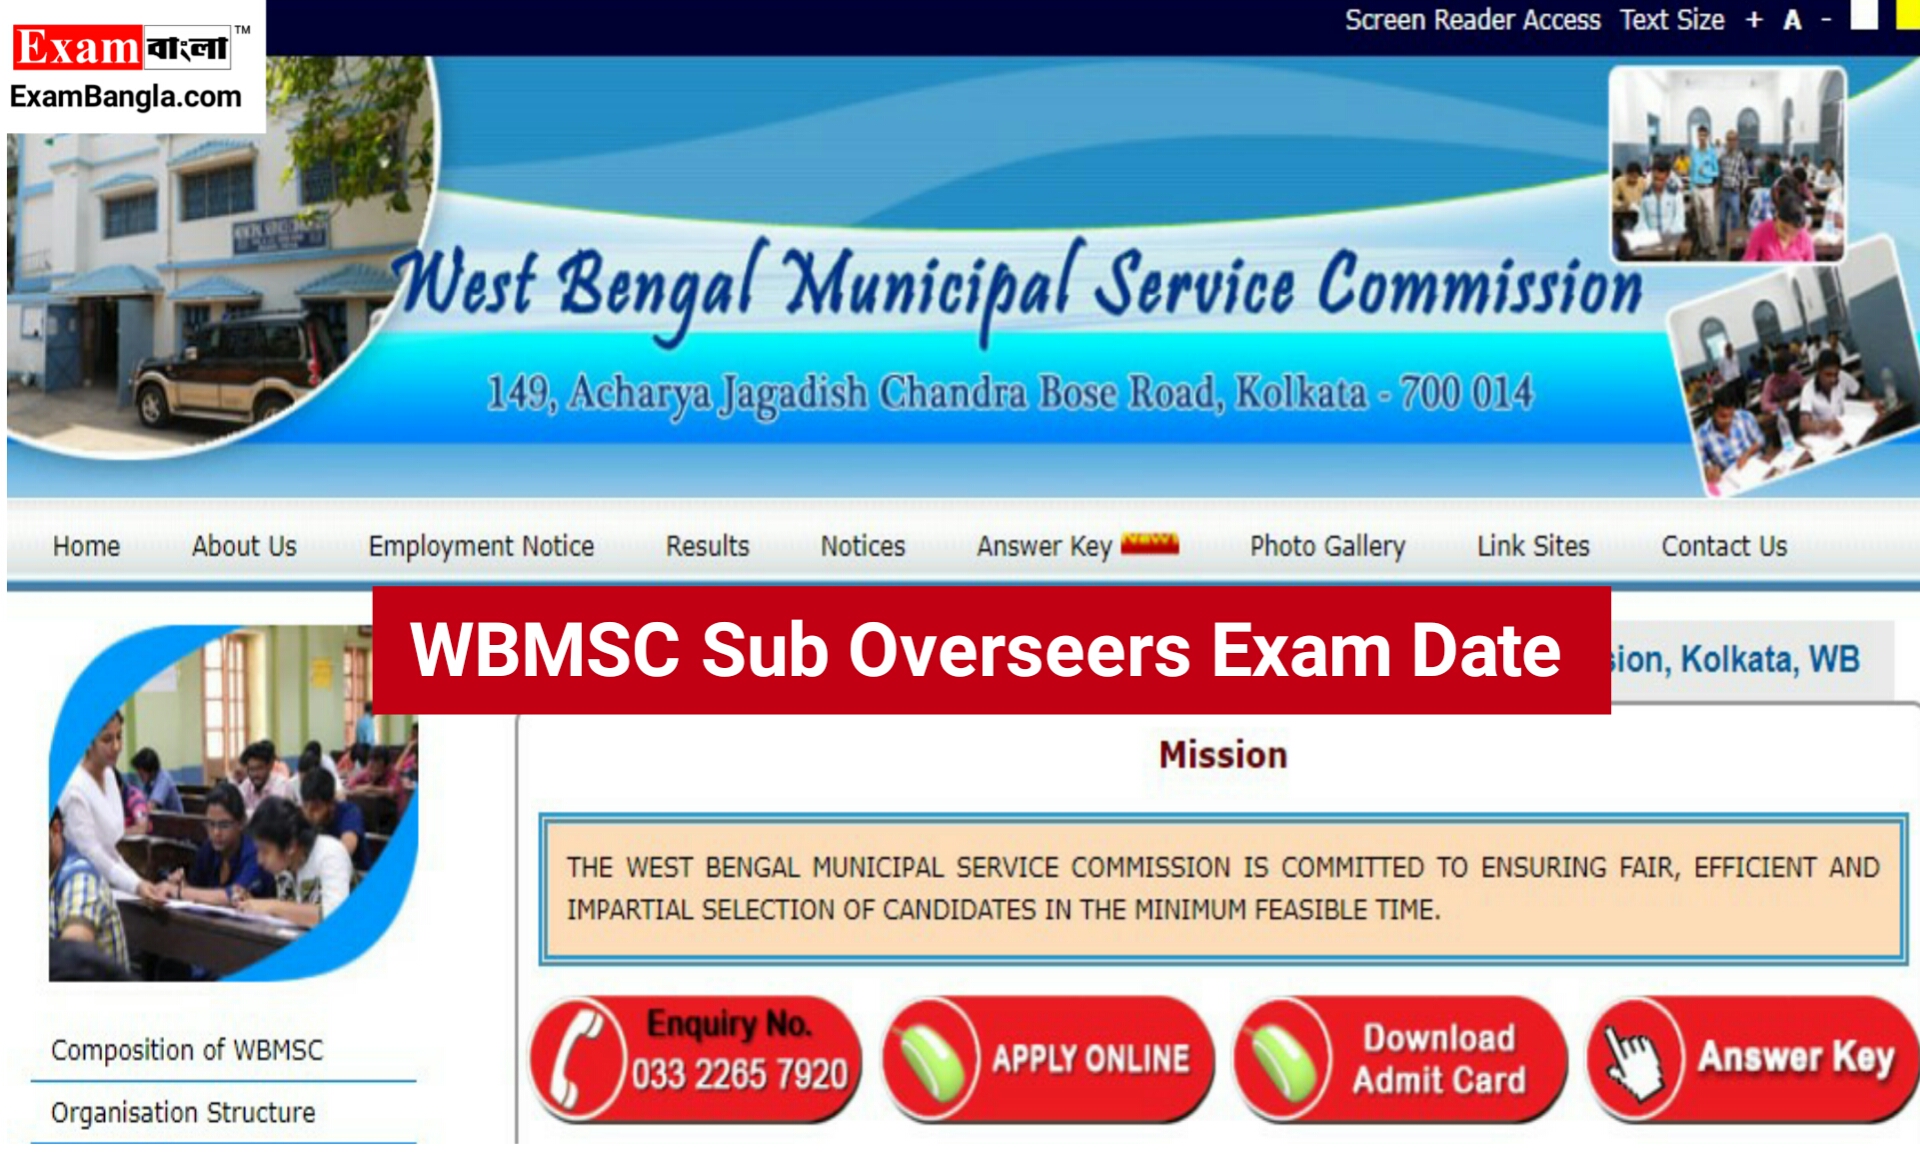 WBMSC Sub Overseer Exam Date